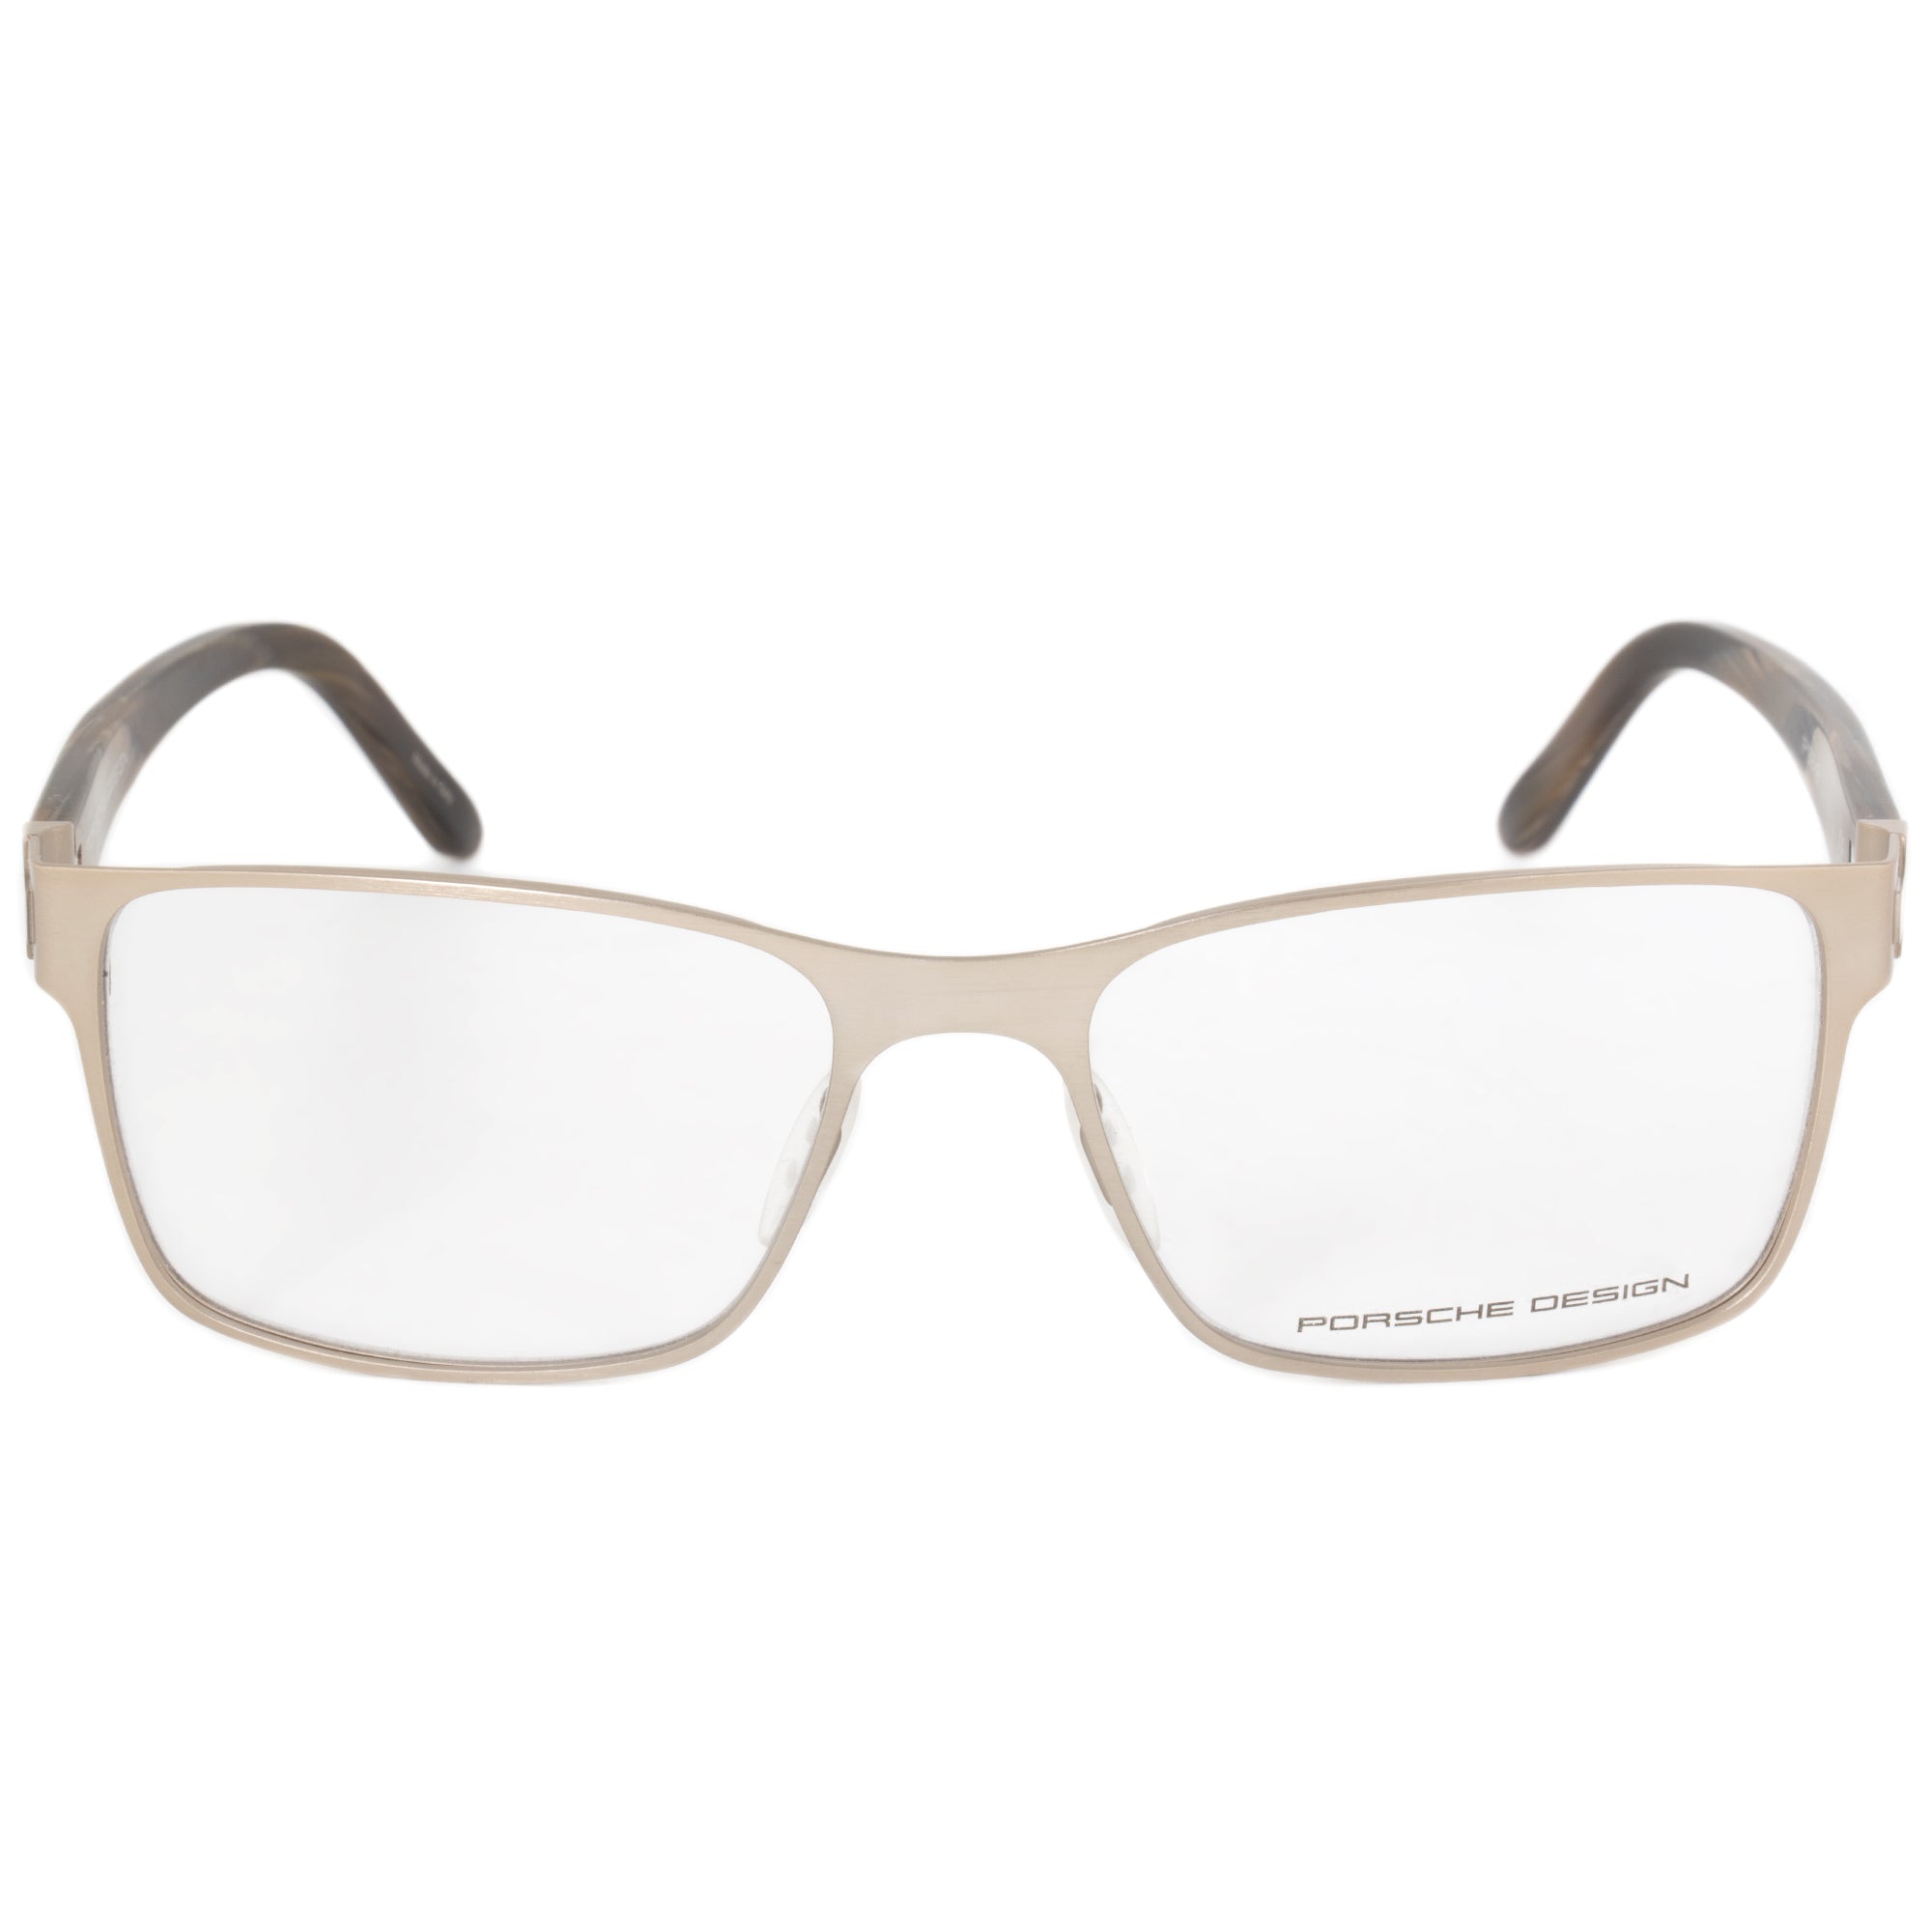 Porsche Design P8248 C Square | Matte Bronze/Havana| Eyeglass Frames